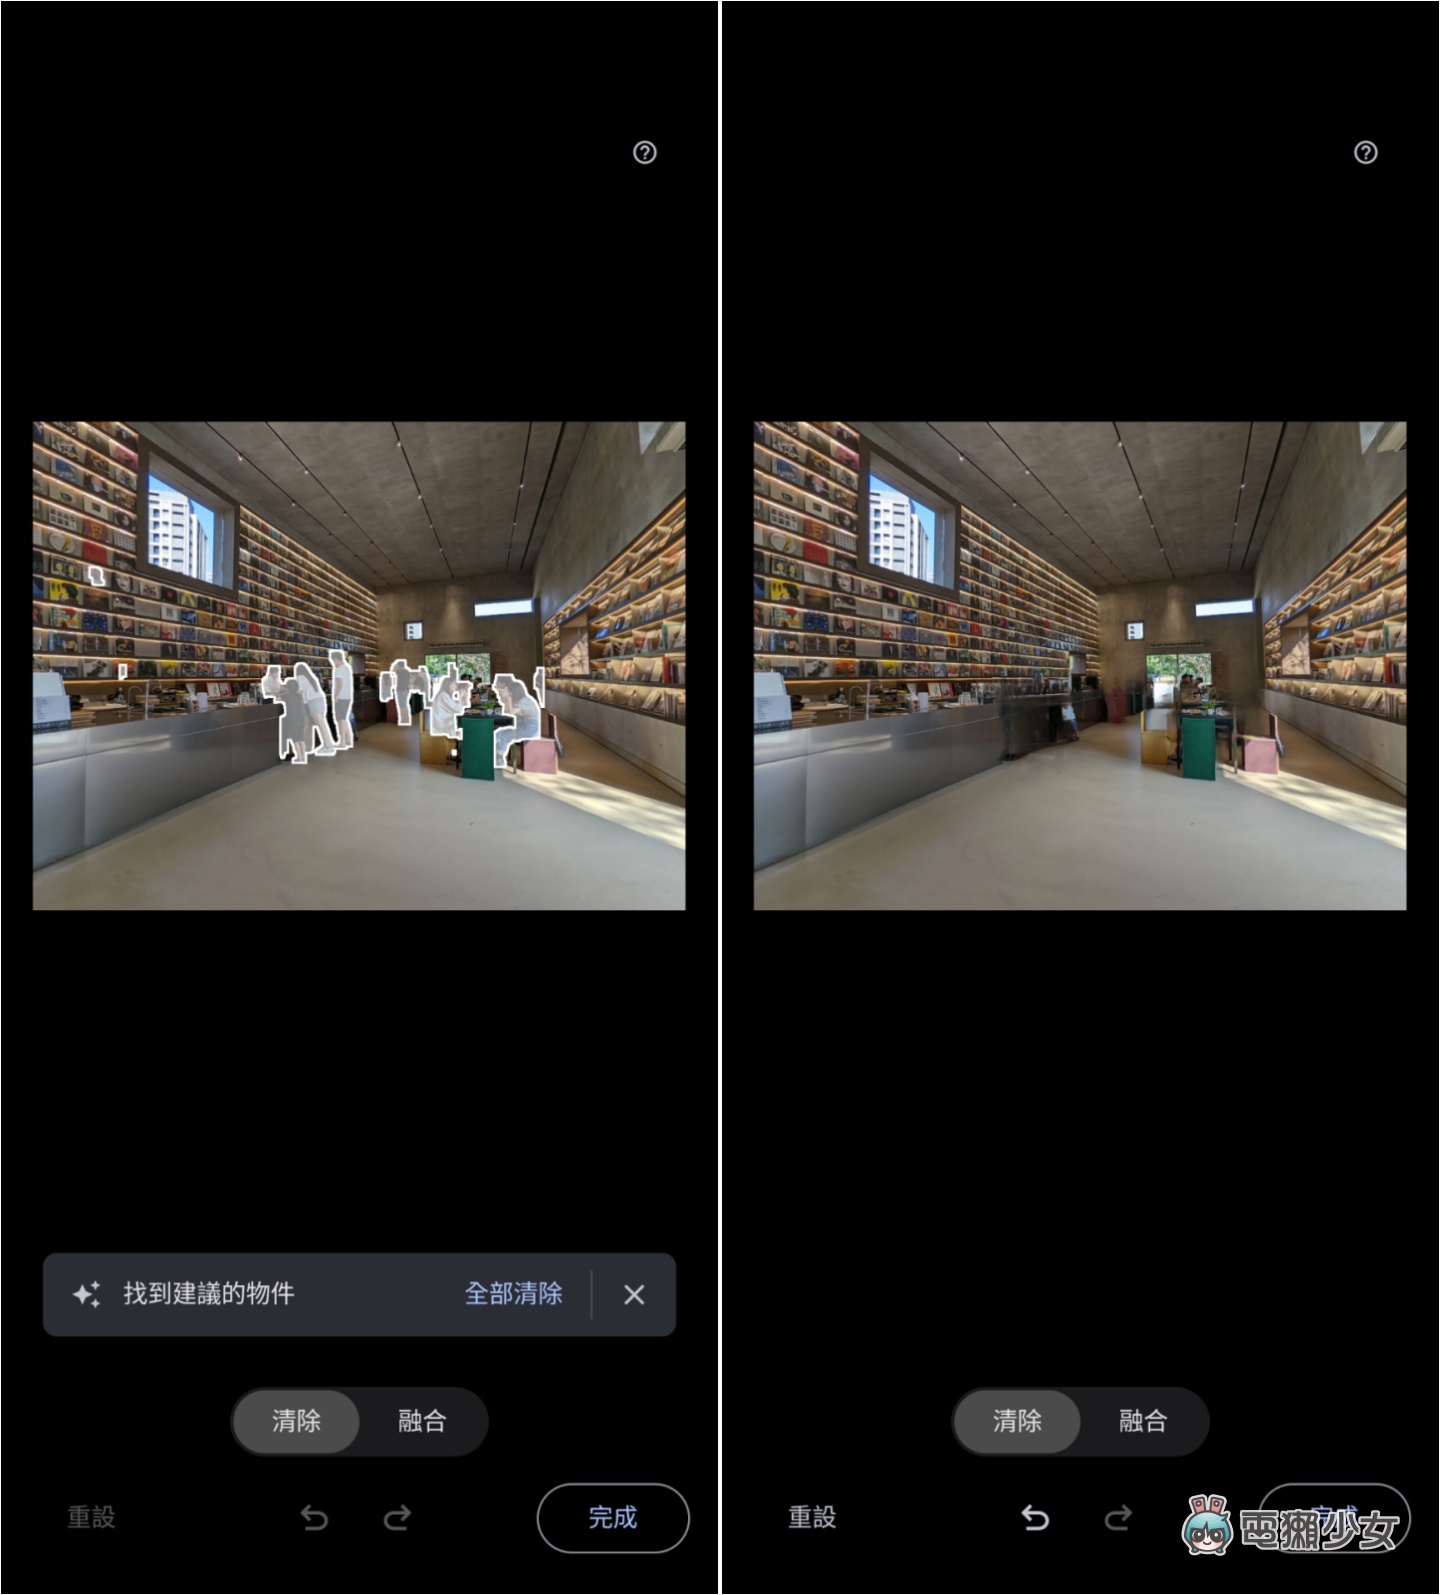 Google Pixel 6a 上手開箱！與 Google Pixel 6 該選誰？拍照有差很多嗎？情境實拍、續航比給你看